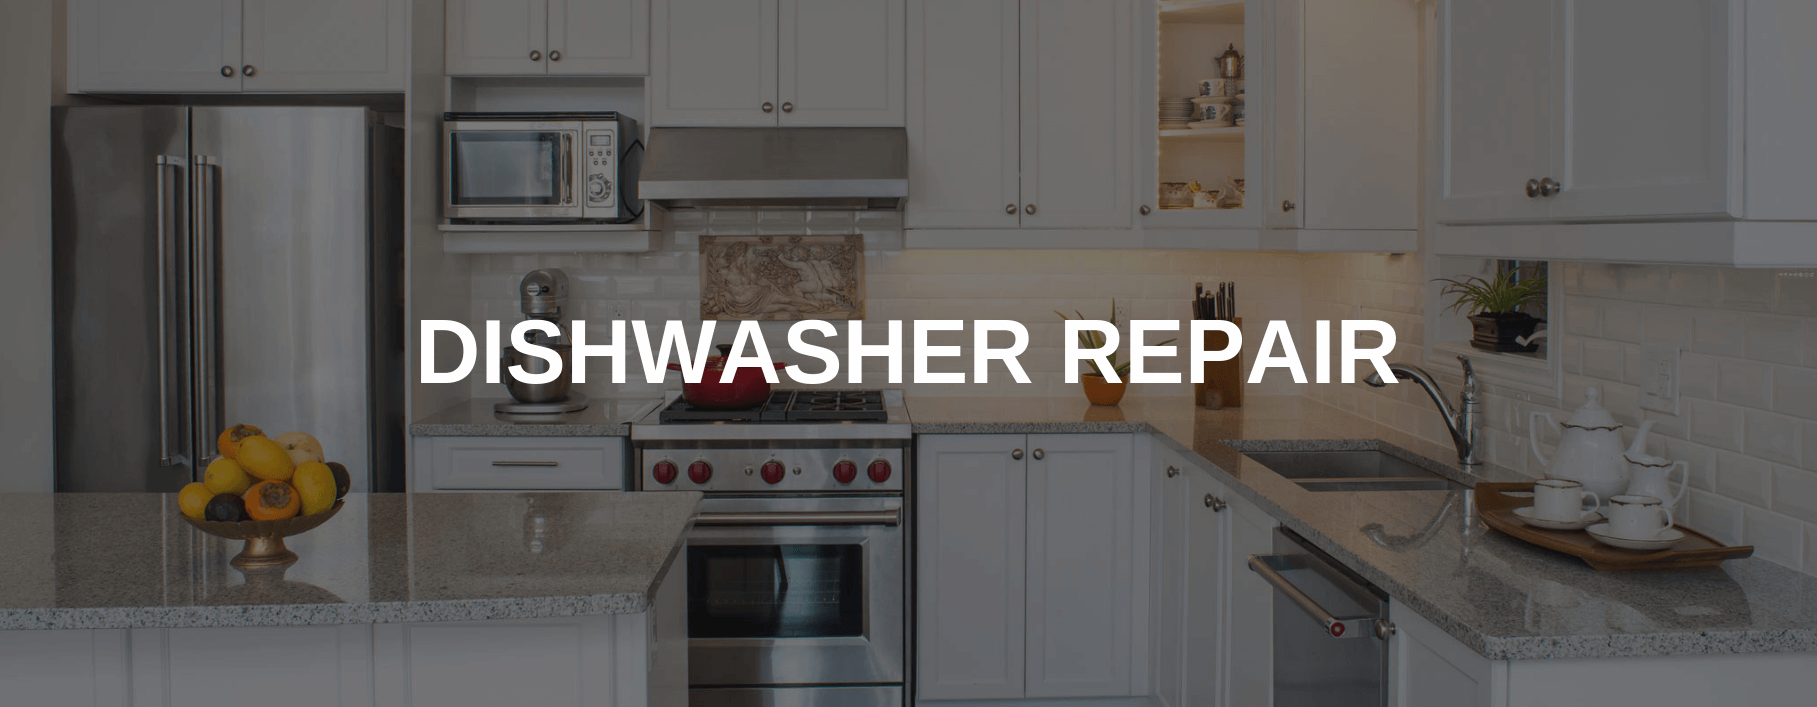 dishwasher repair city